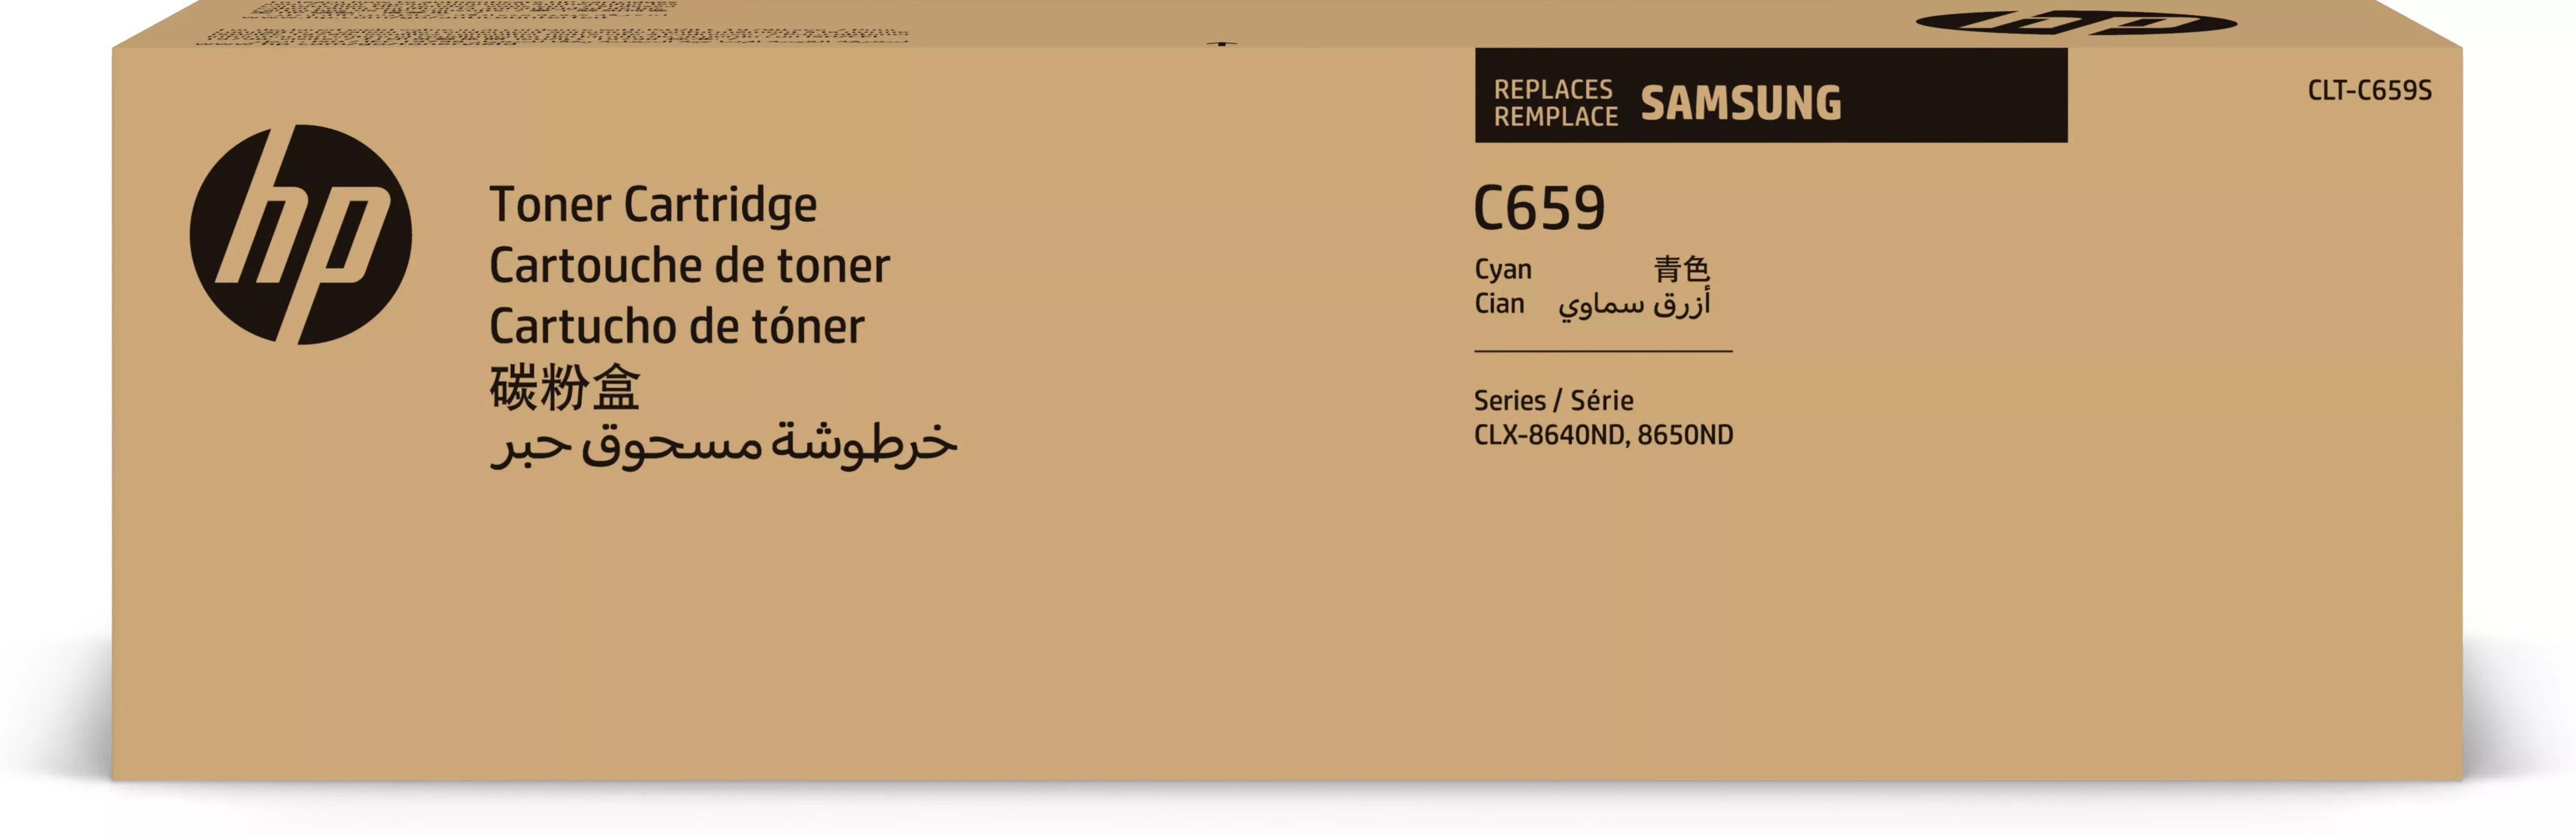 Vente SAMSUNG original Toner cartridge LT-Cartridge659S/ELS HP au meilleur prix - visuel 6